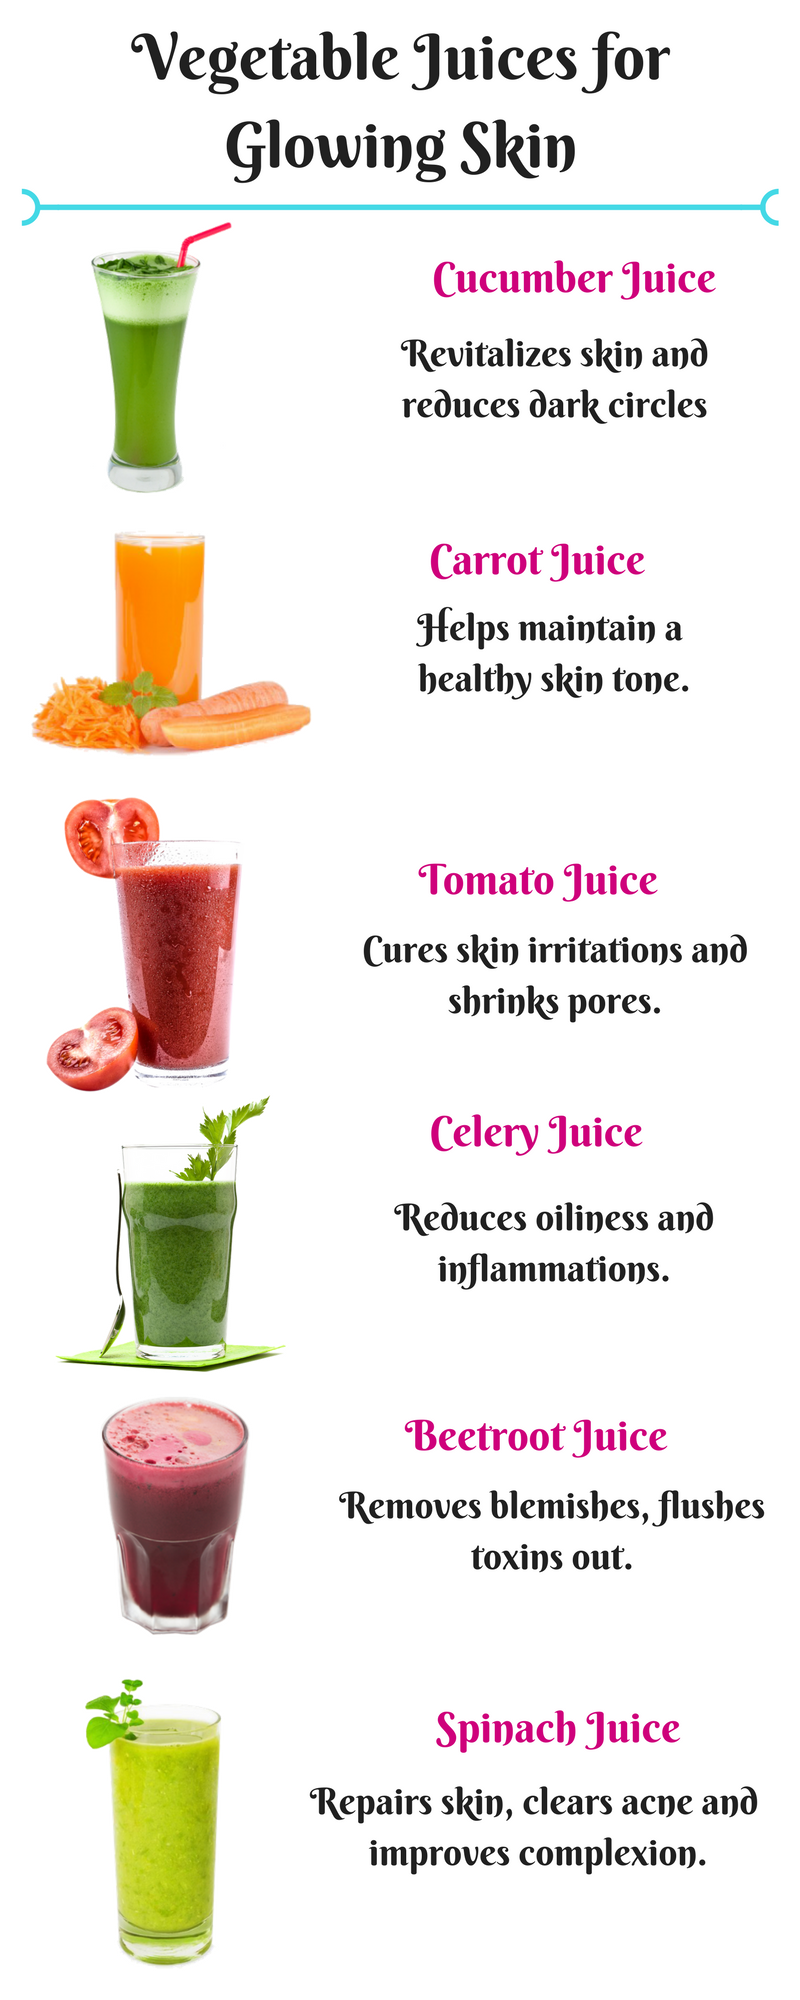 beetroot juice for skin - best juice images